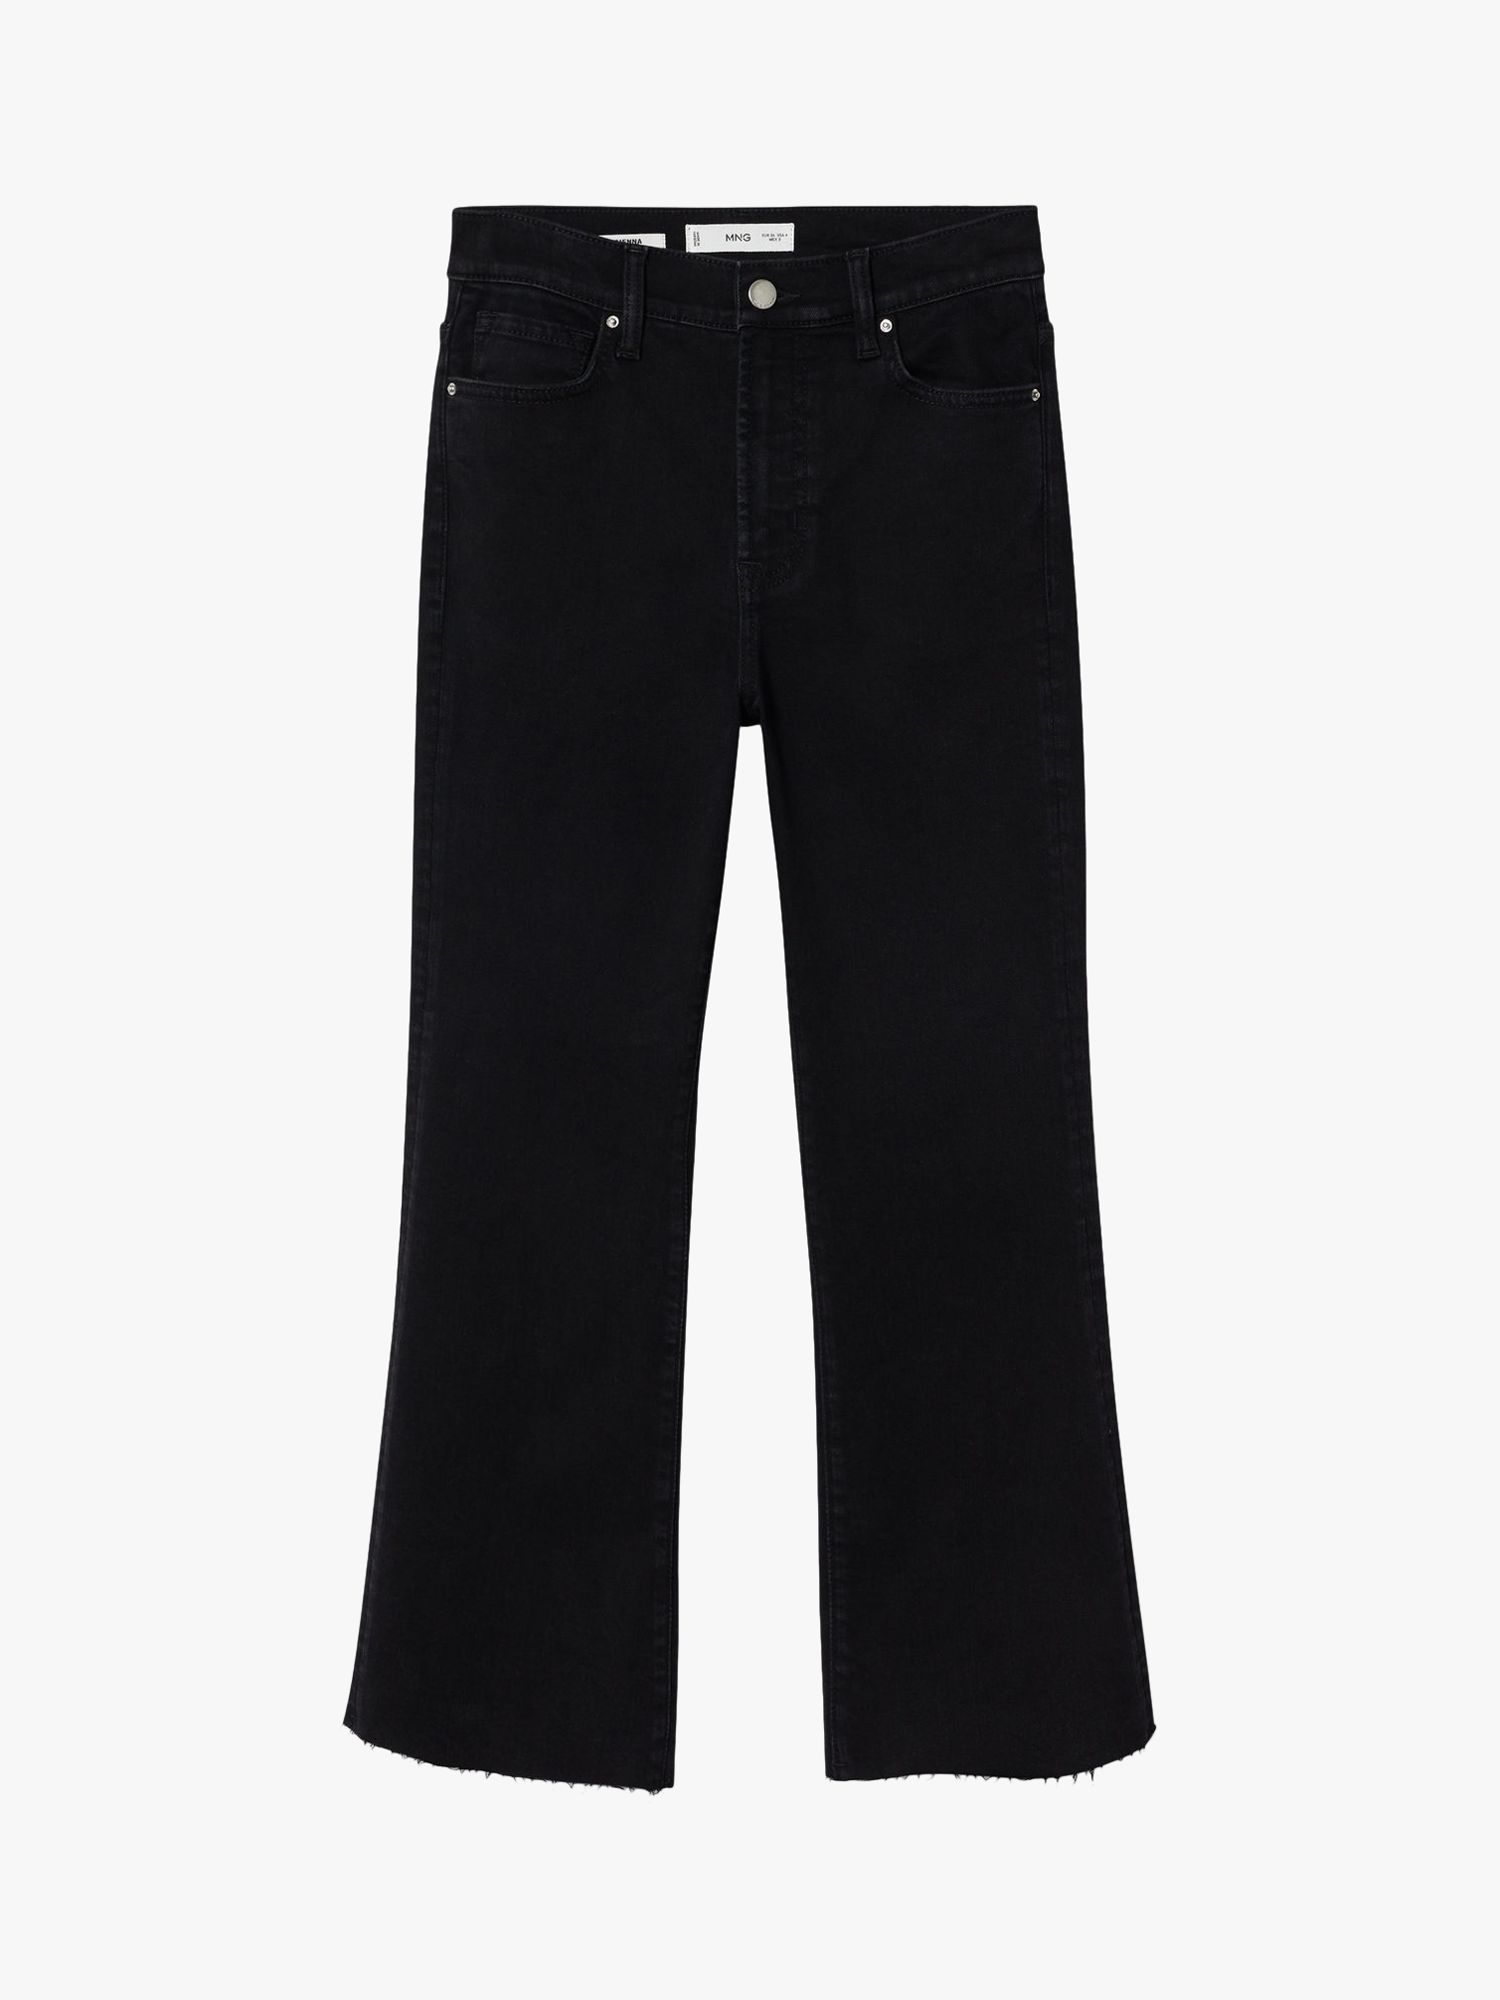 Mango Sienna Straight Leg Jeans, Black at John Lewis & Partners